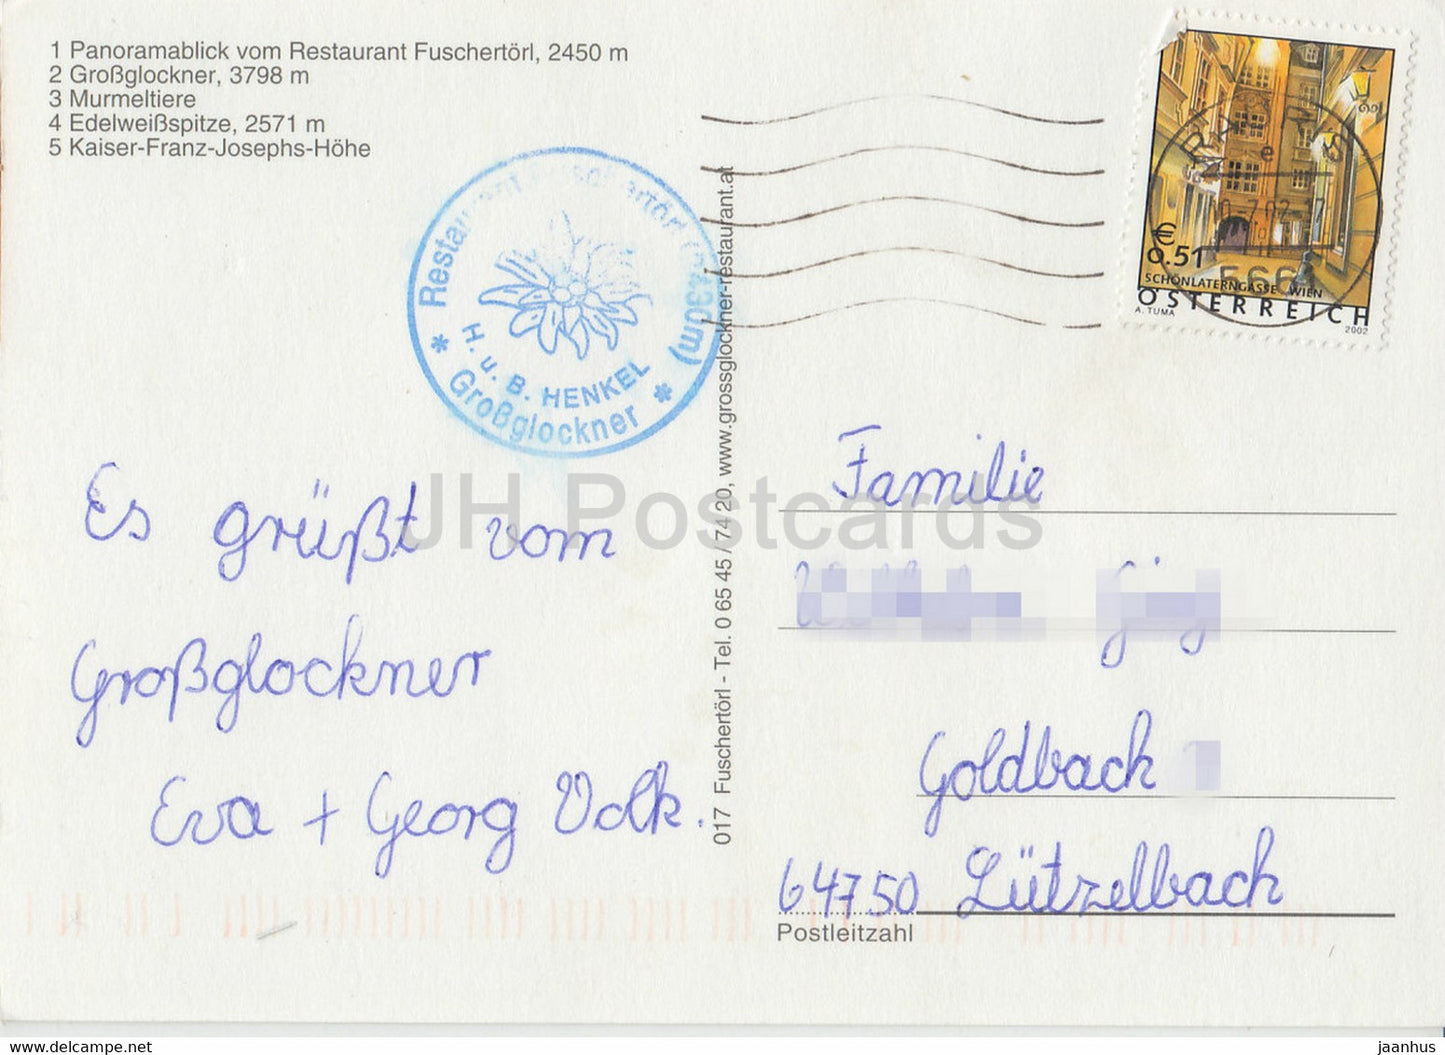 Grossglockner - Fuschertorl 2450 m - Murmeltiere - Edelweissspitze - Marmot - animals - 2002 - Austria - used